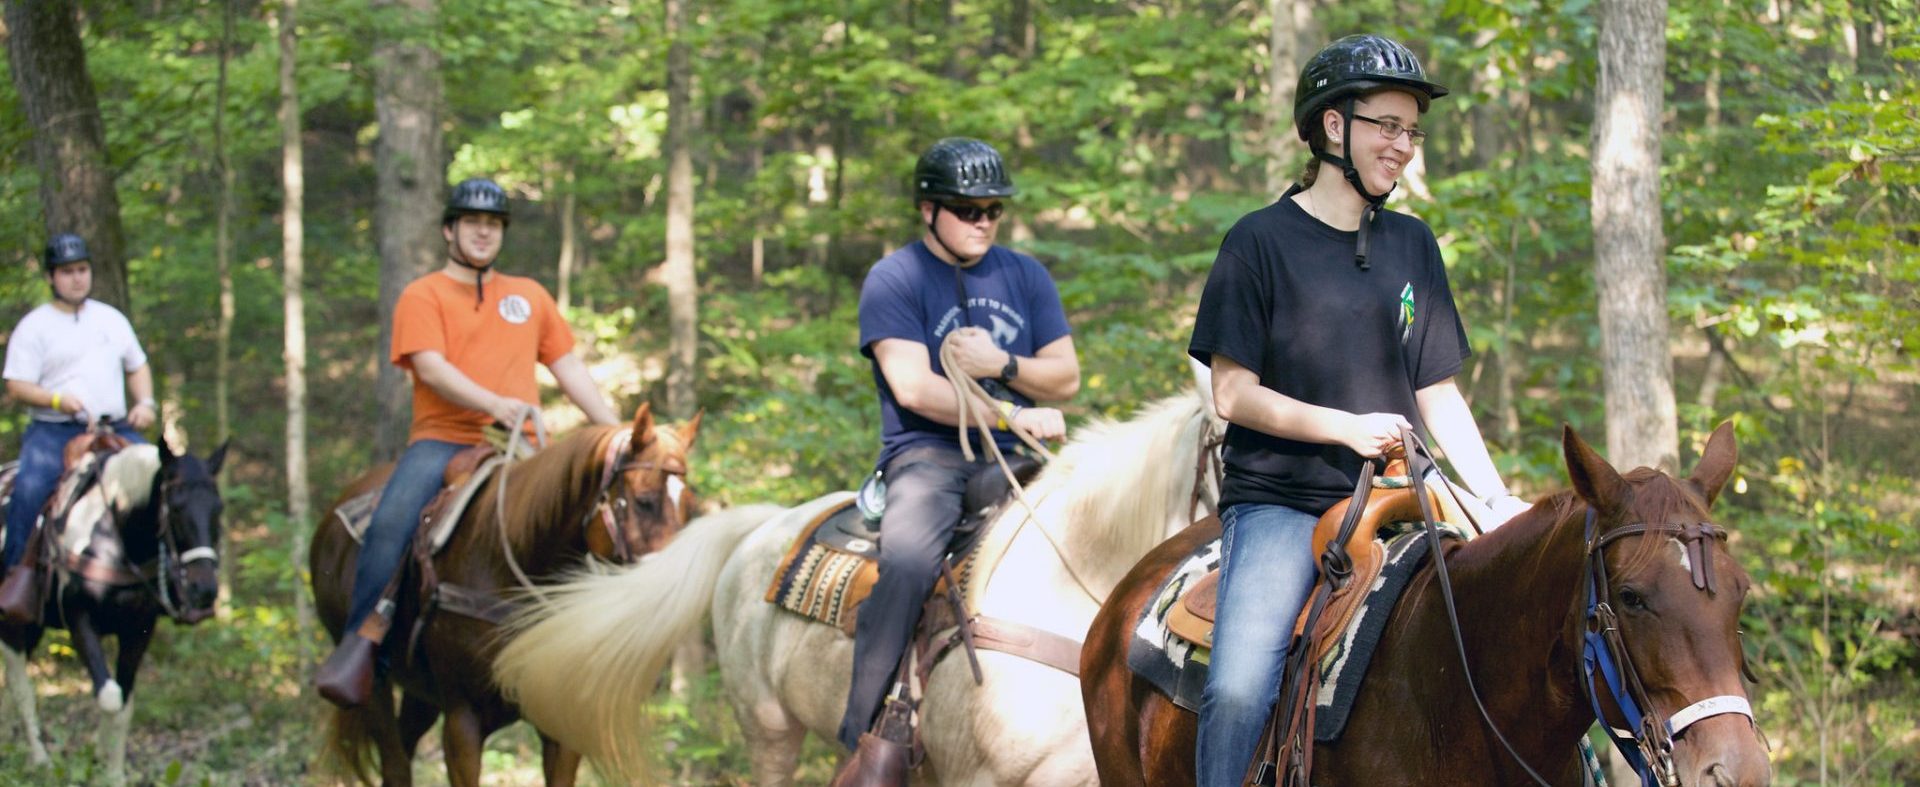 Venturing horseback riding